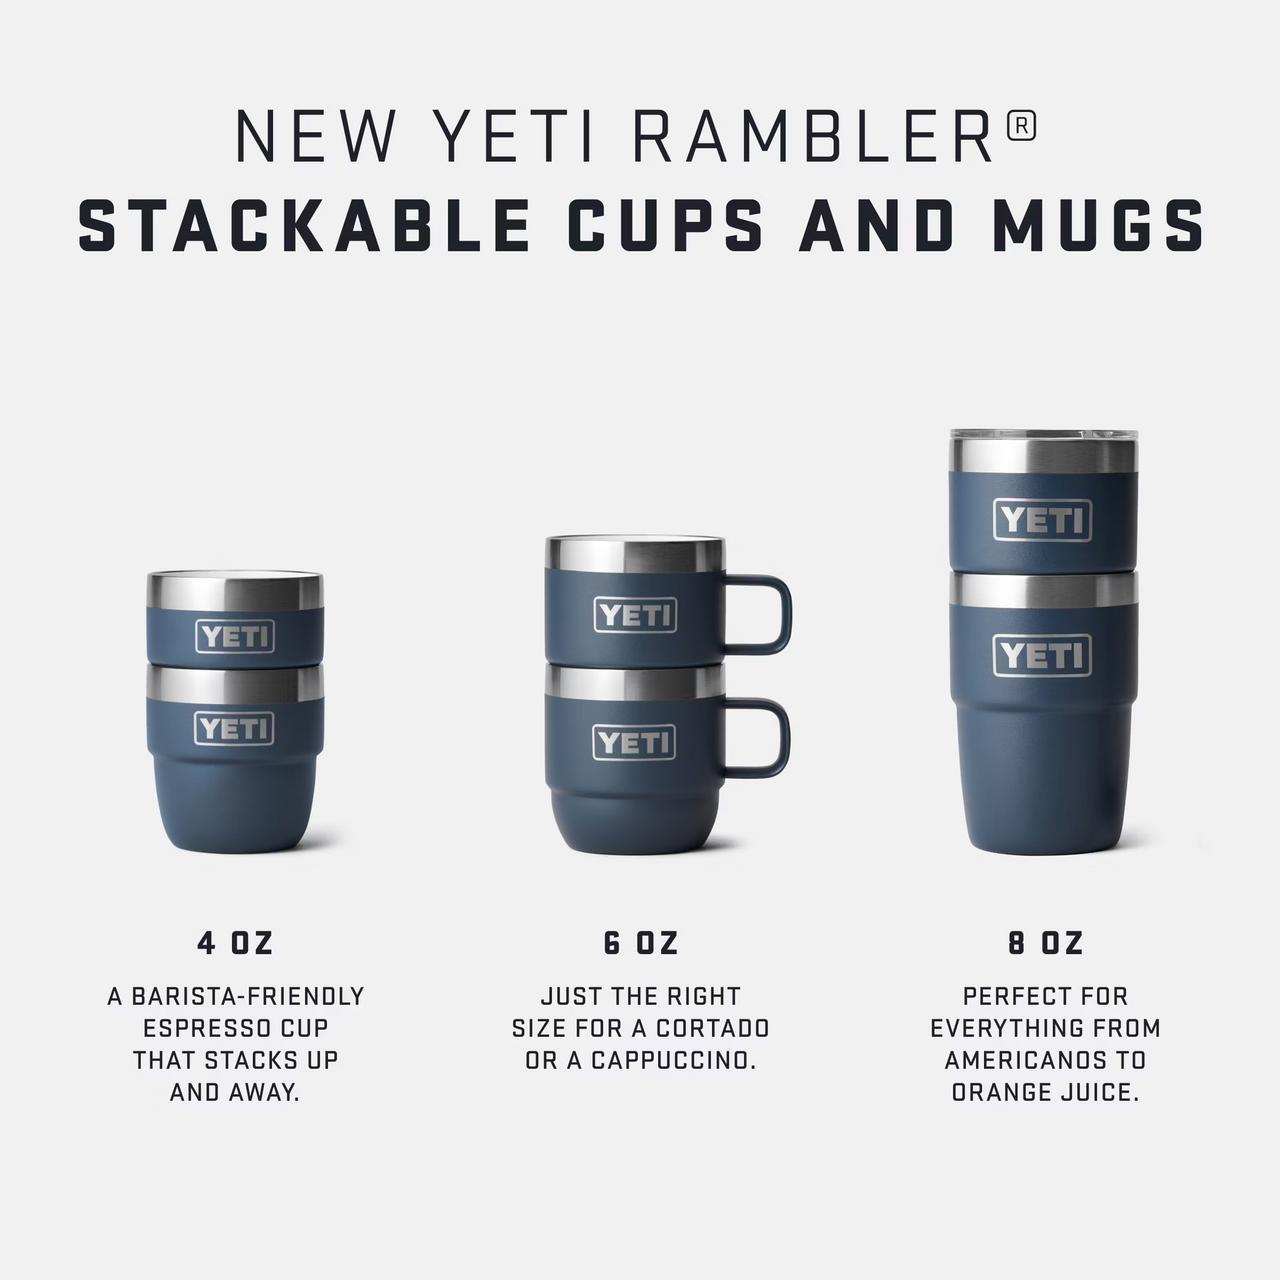 YETI Rambler 8 oz Stackable Cup